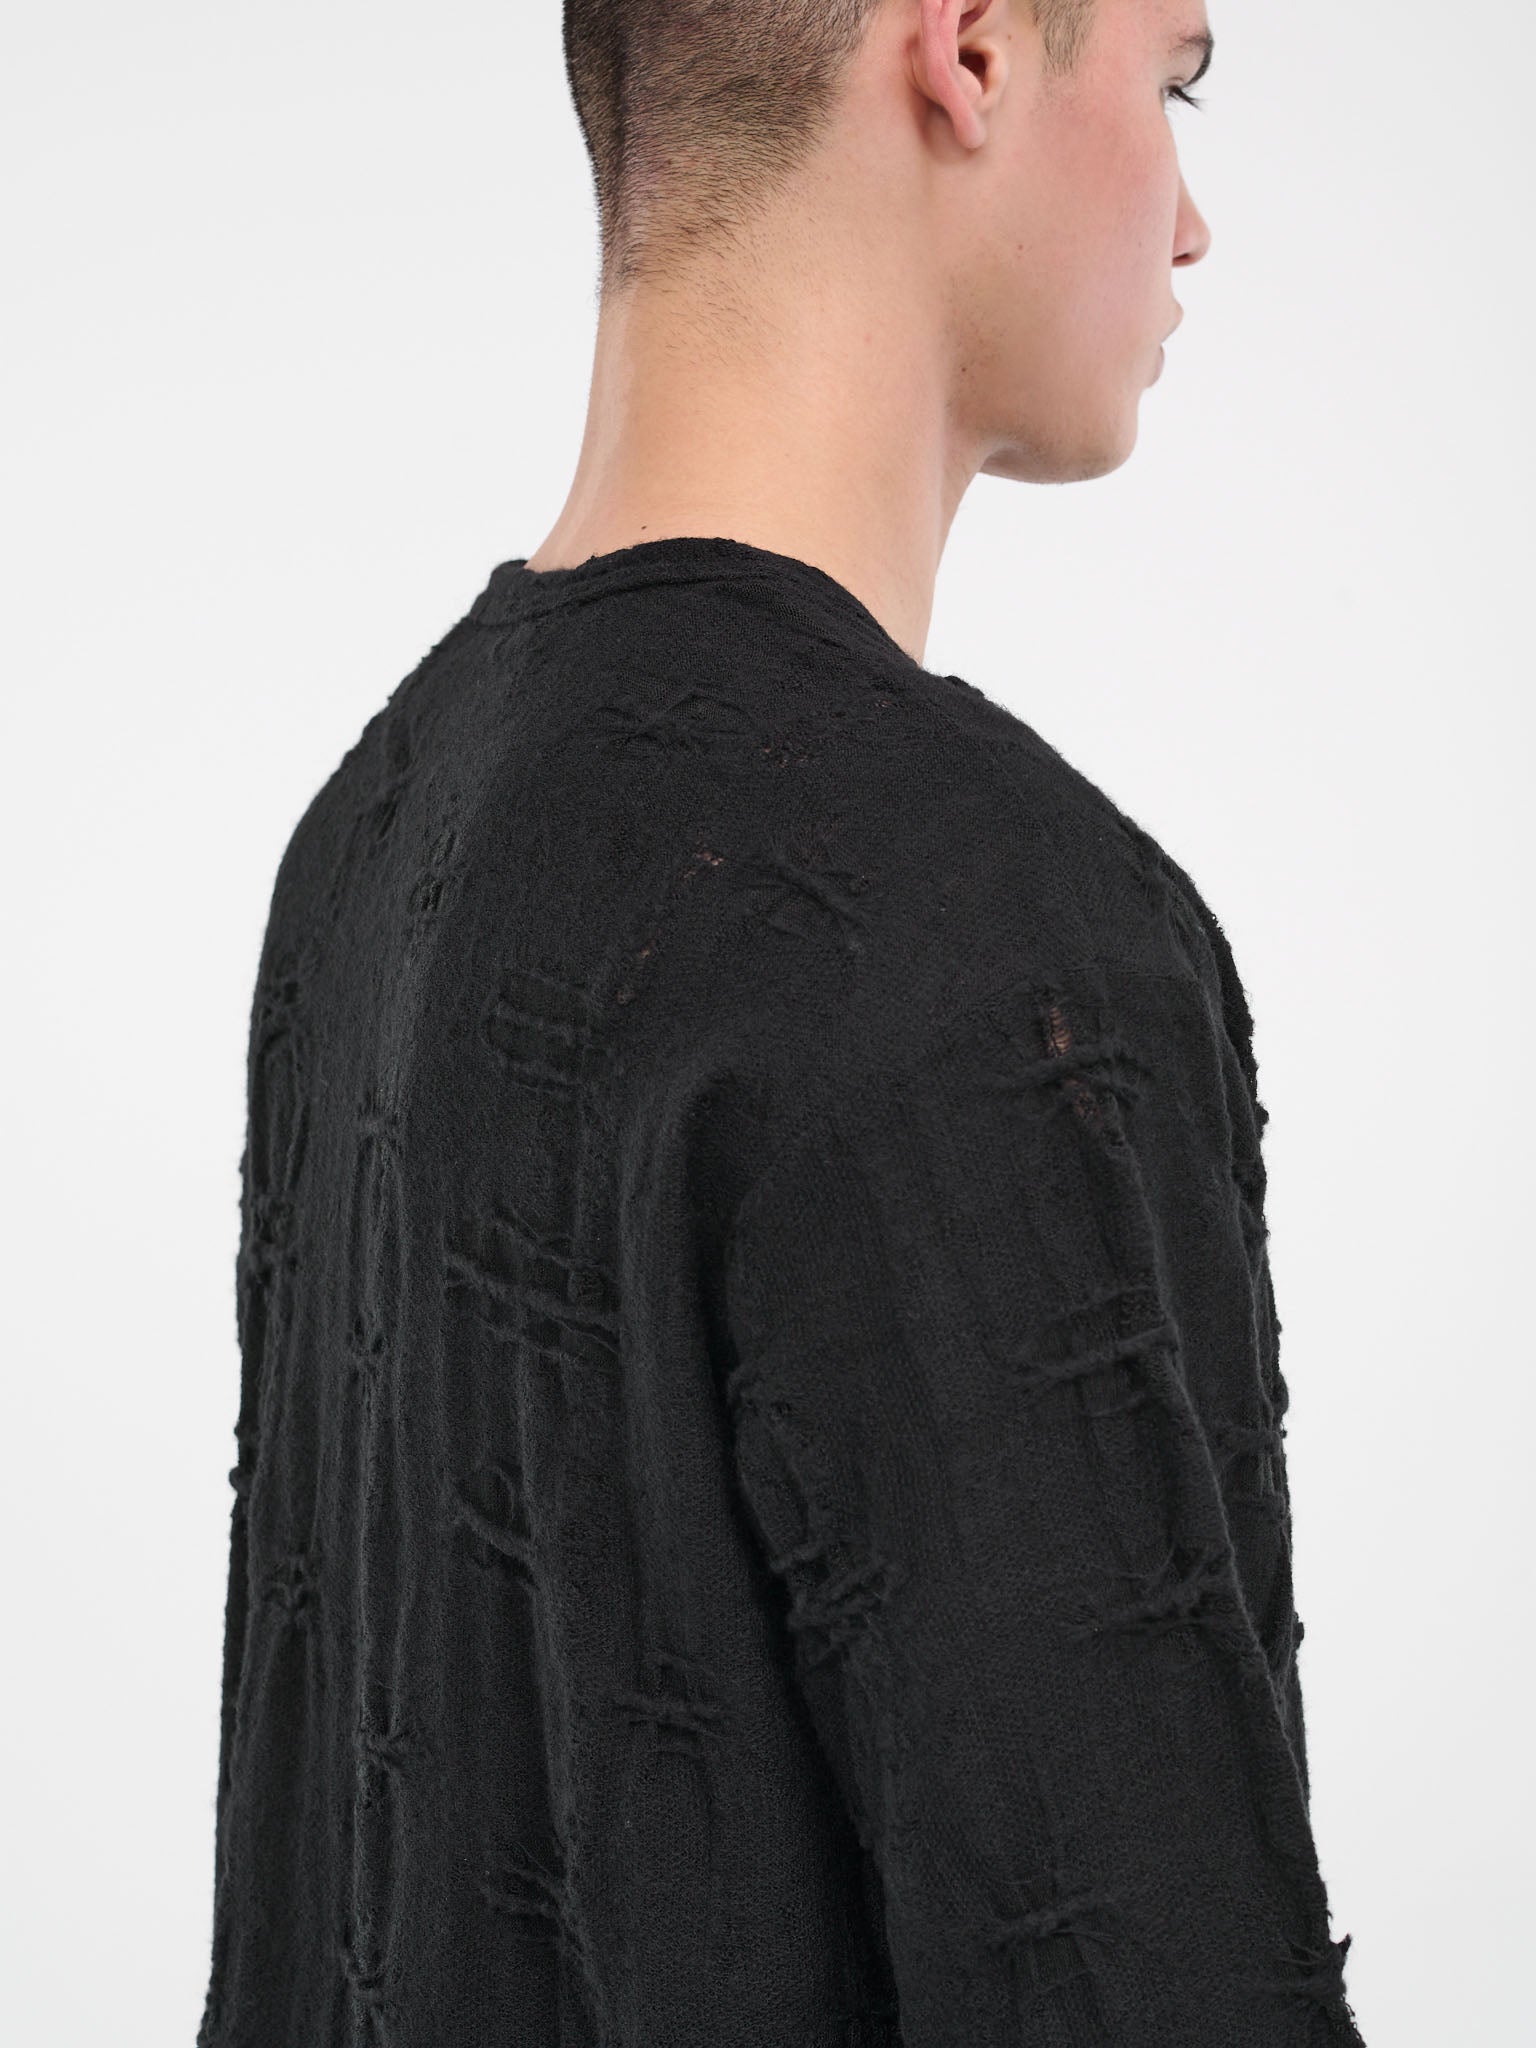 Damaged Knit Sweater (HJ-T36-980-1-BLACK)